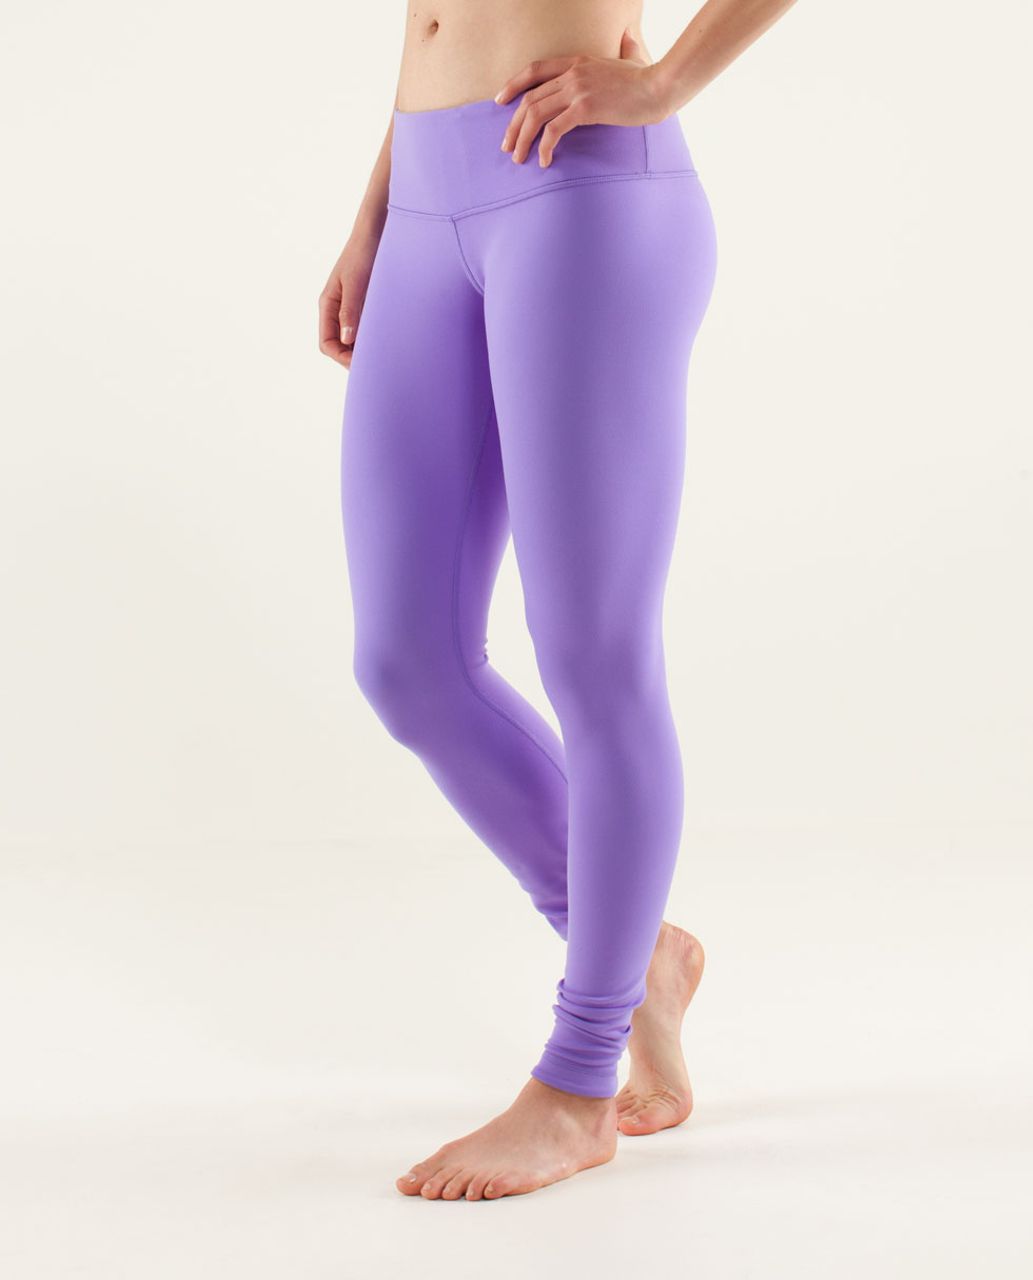 Lululemon Wunder Under Mid-Rise Pant 24x 28.5 Size 4 Purple Violet Plum Full